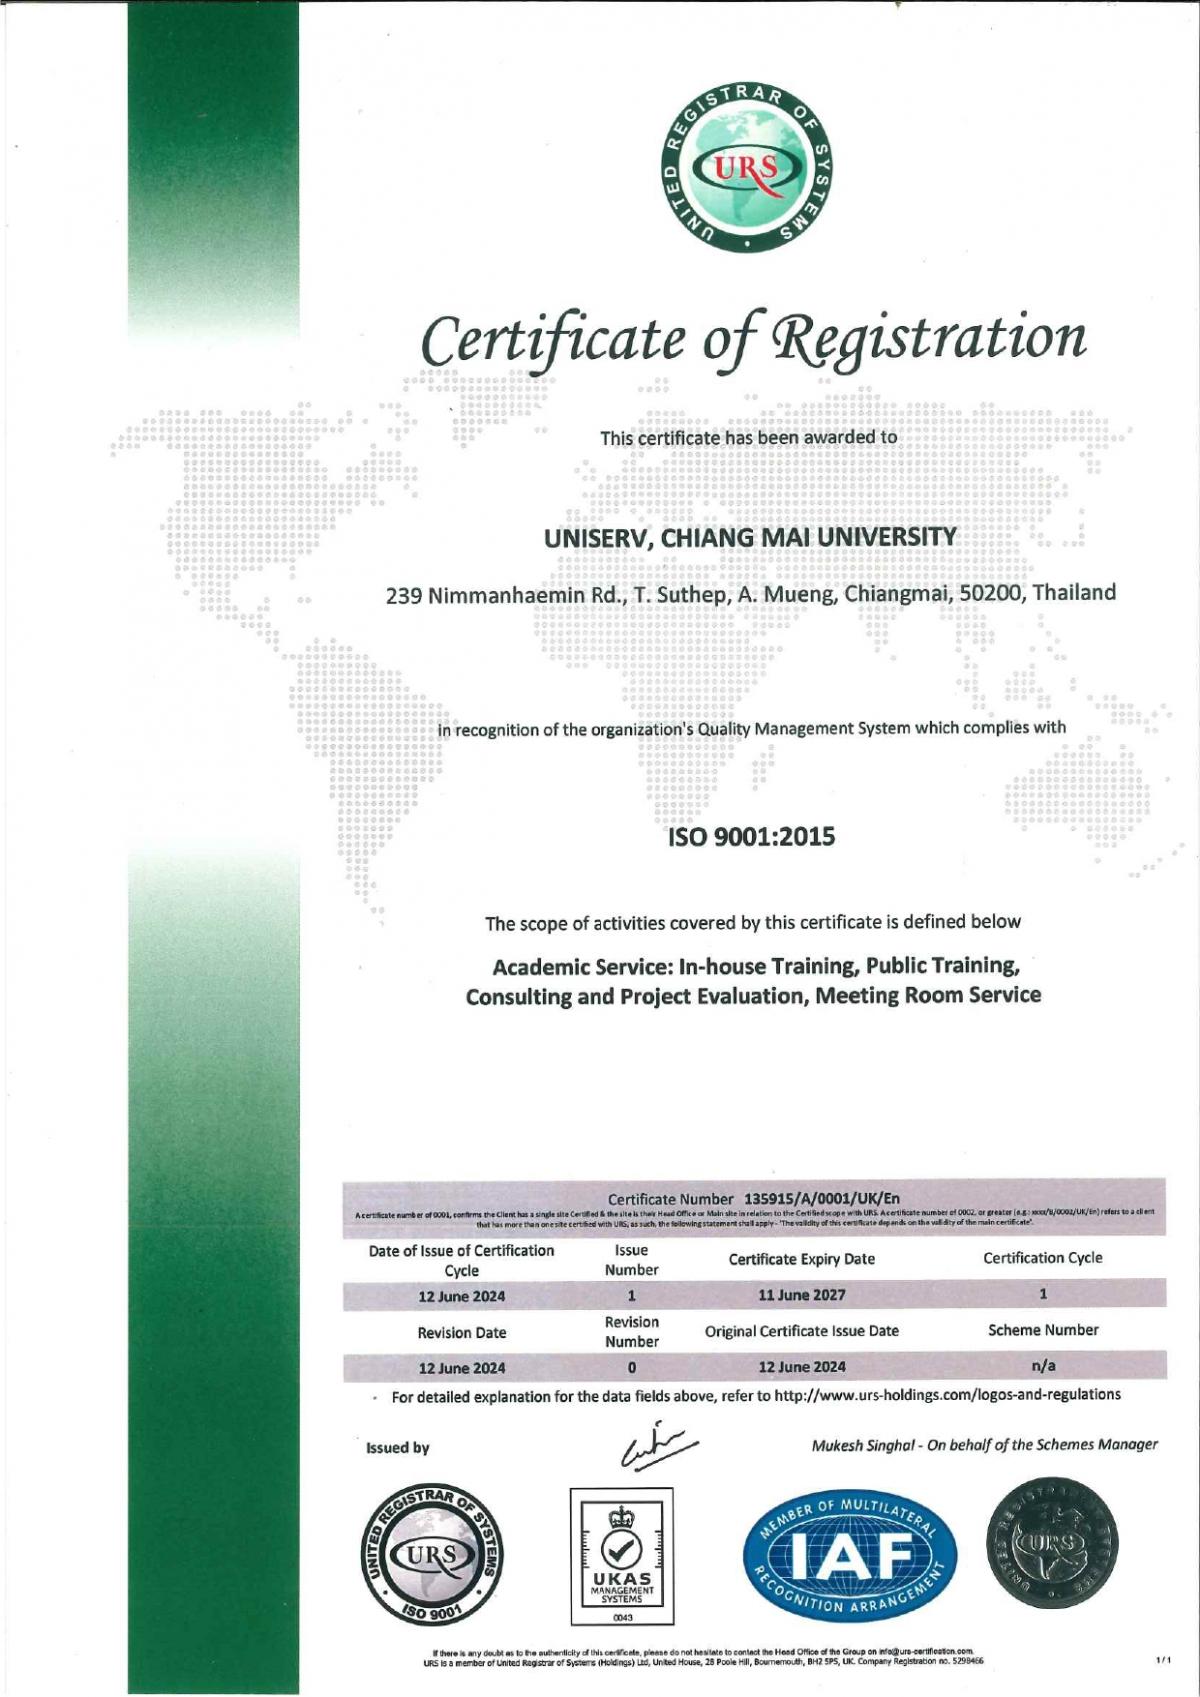 Uniserv CMU รับมอบใบ Certificate ระบบจัดการคุณภาพมาตรฐาน ISO 9001:2015 อย่างเป็นทางการ